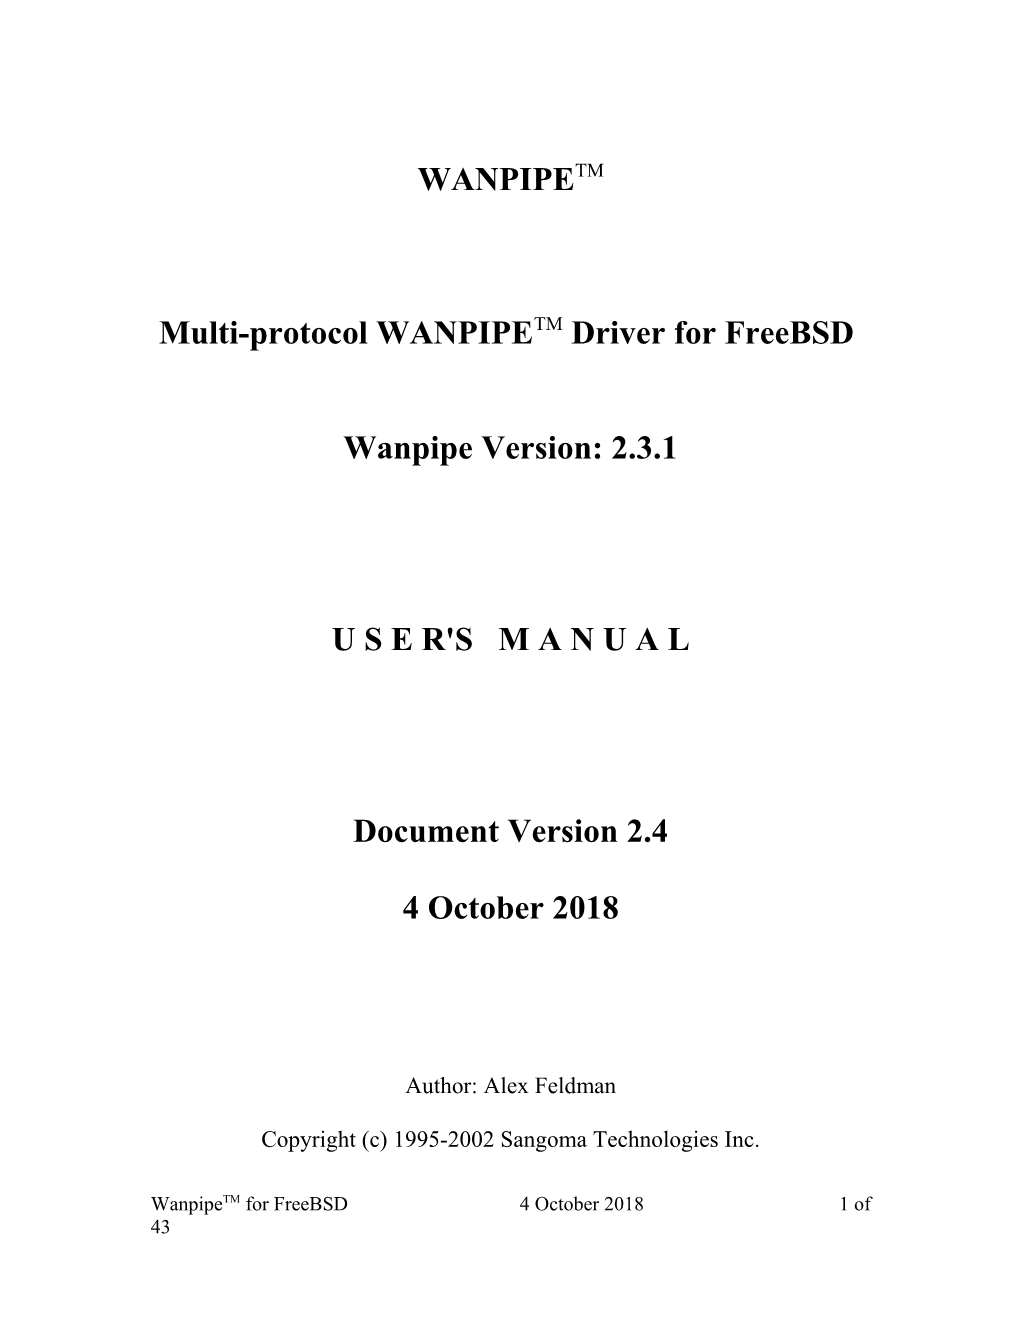 Multi-Protocol WANPIPETM Driver for Freebsd